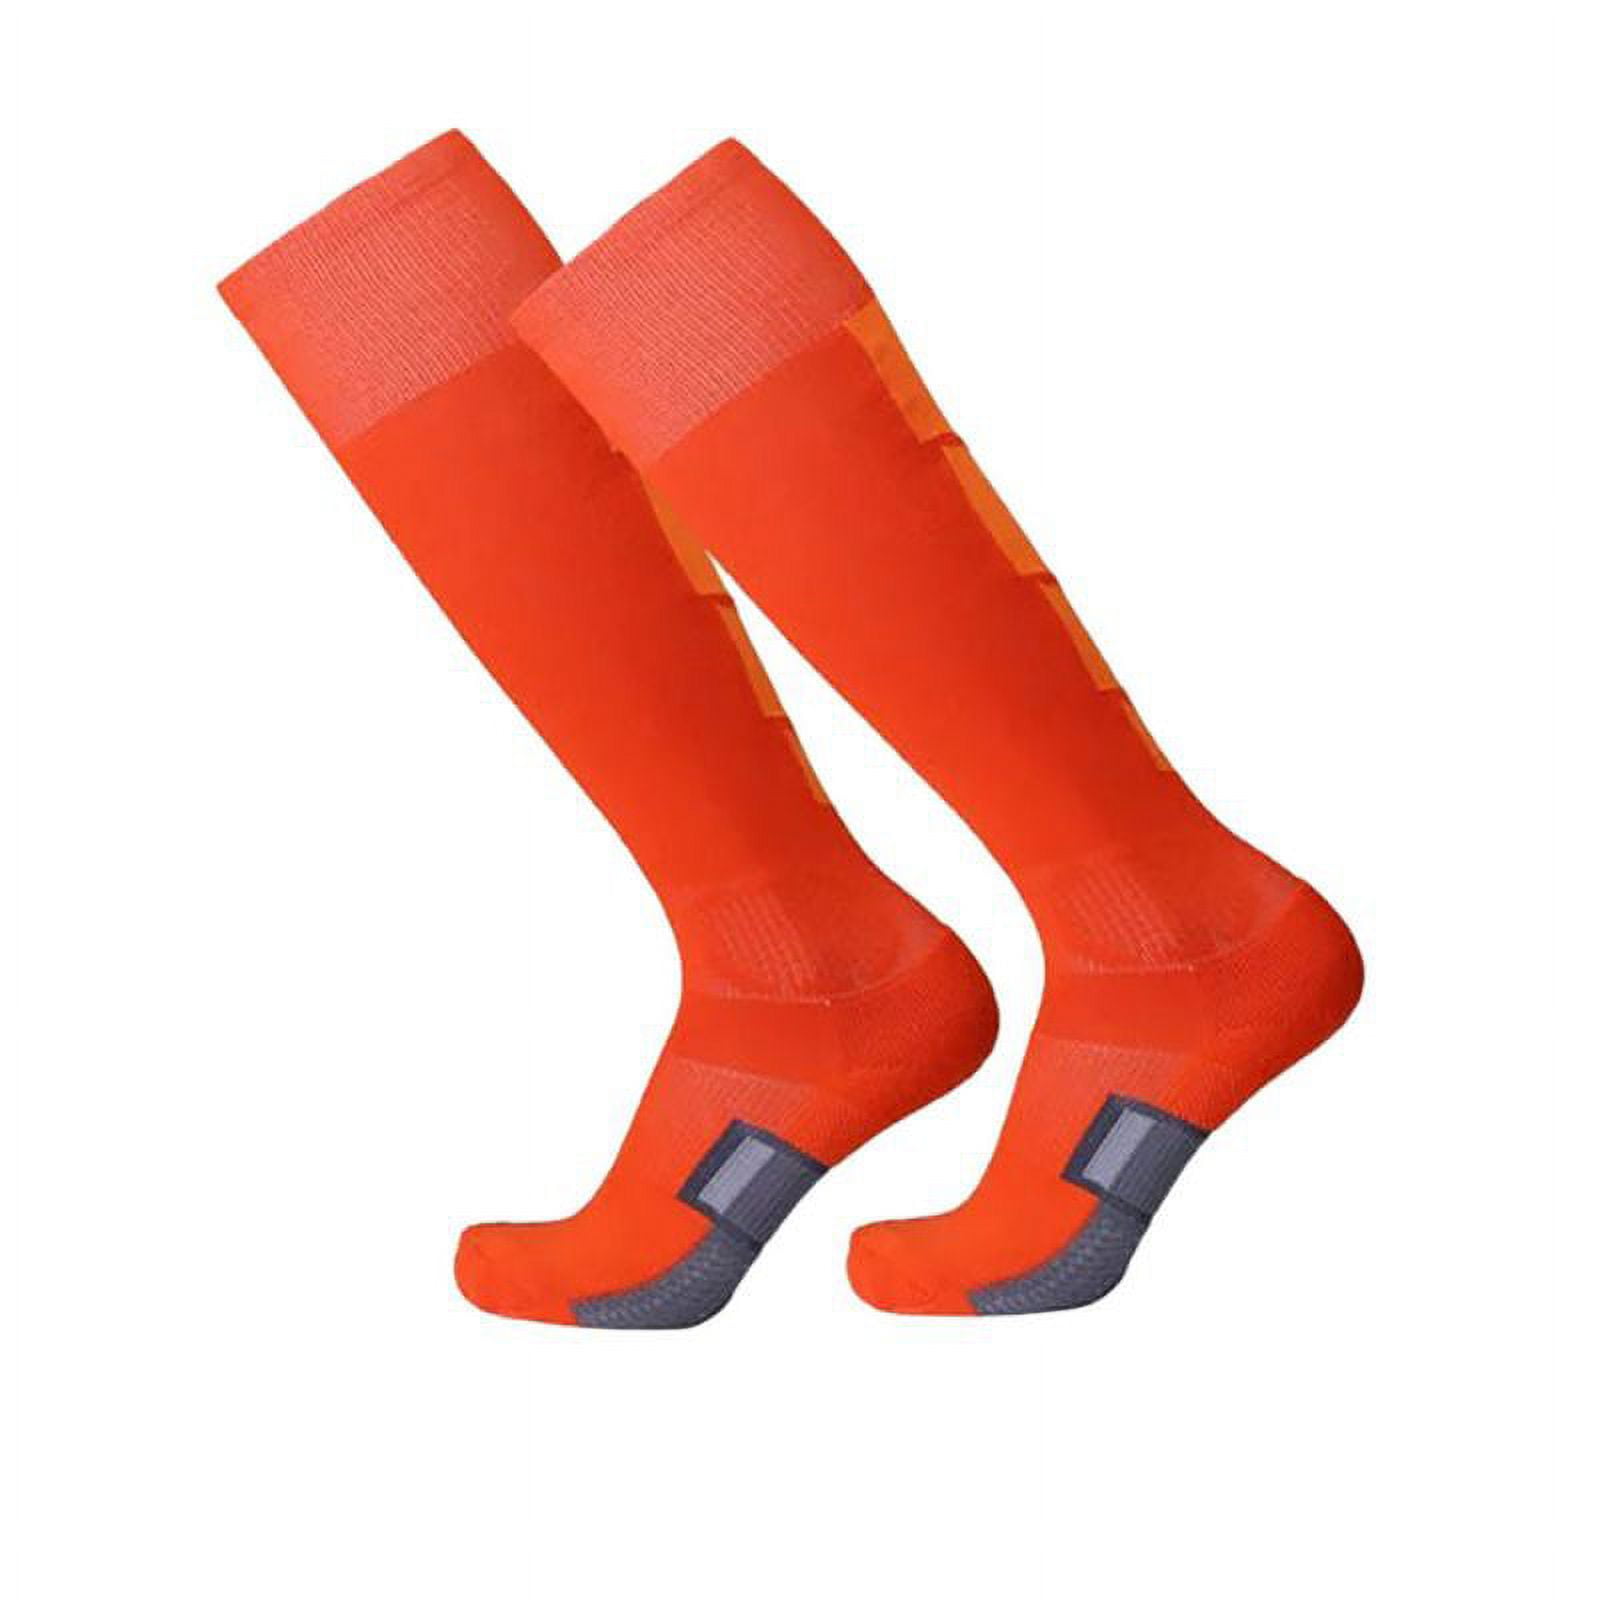 Wisremt Compression Socks Men Leg Support Stretch Cotton Soft Compression  Relief Socks calcetines de compresion hombre 